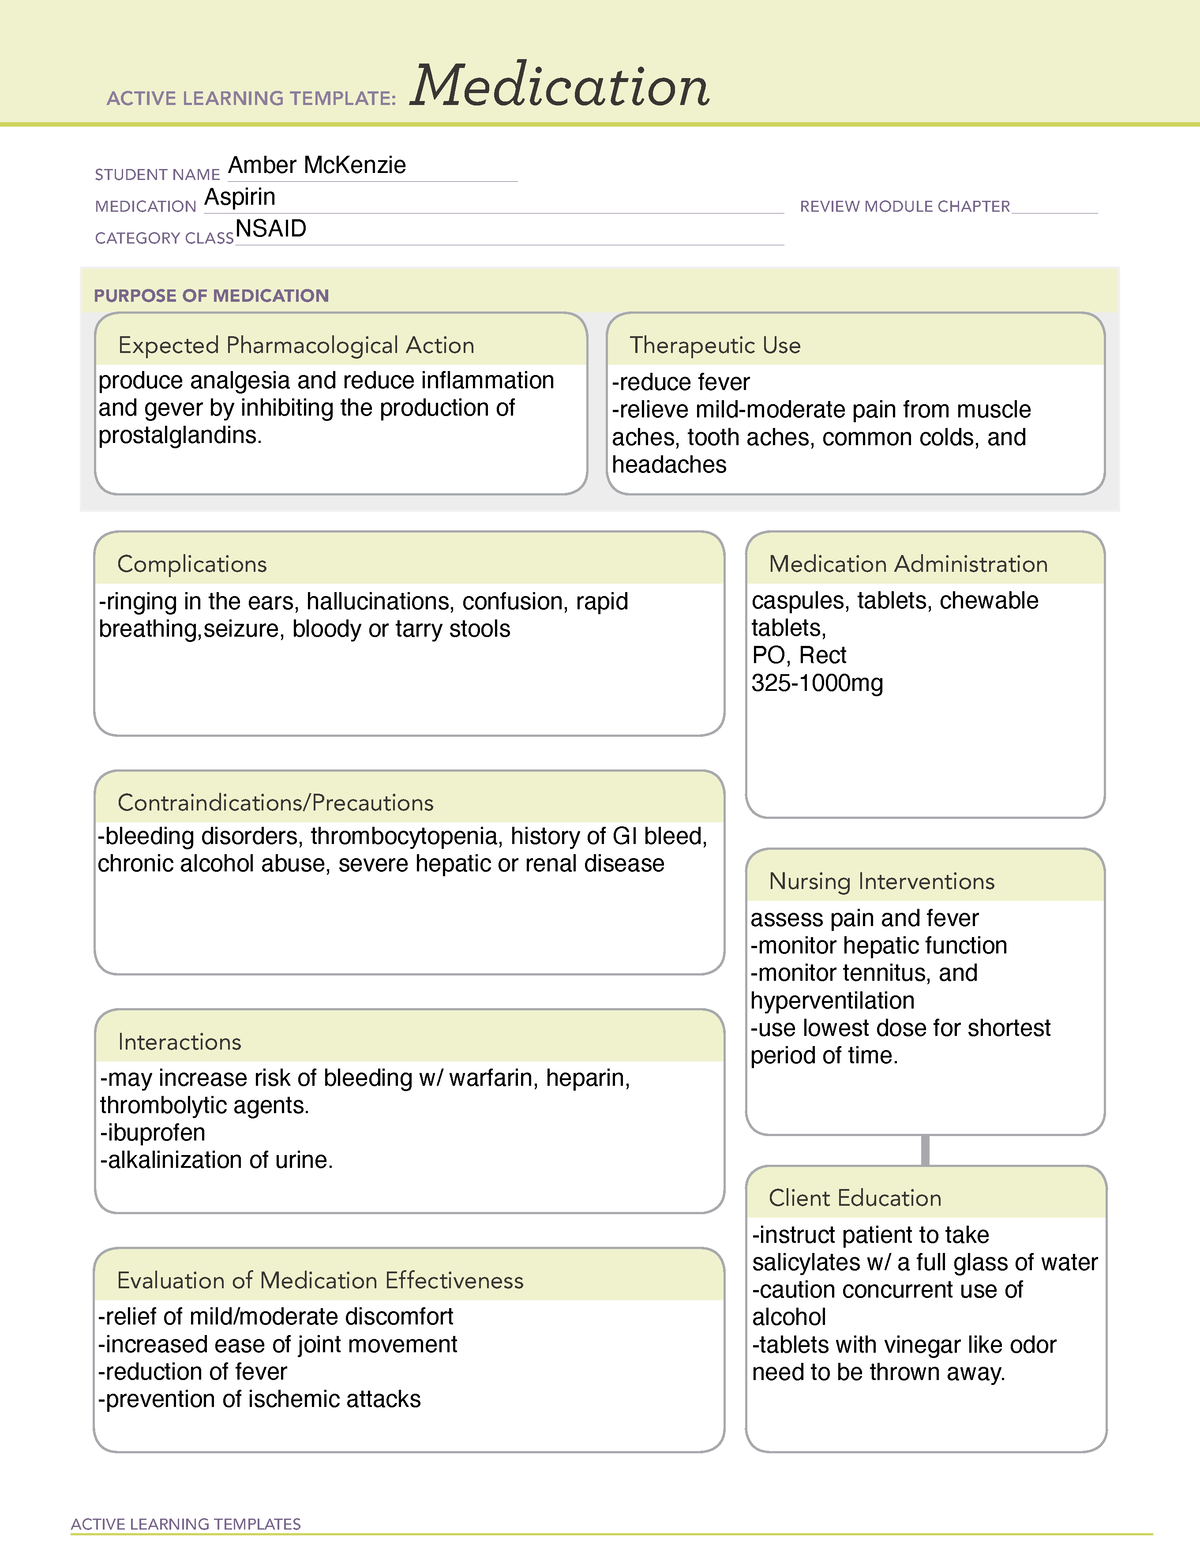 aspirin-medication-template-active-learning-templates-medication